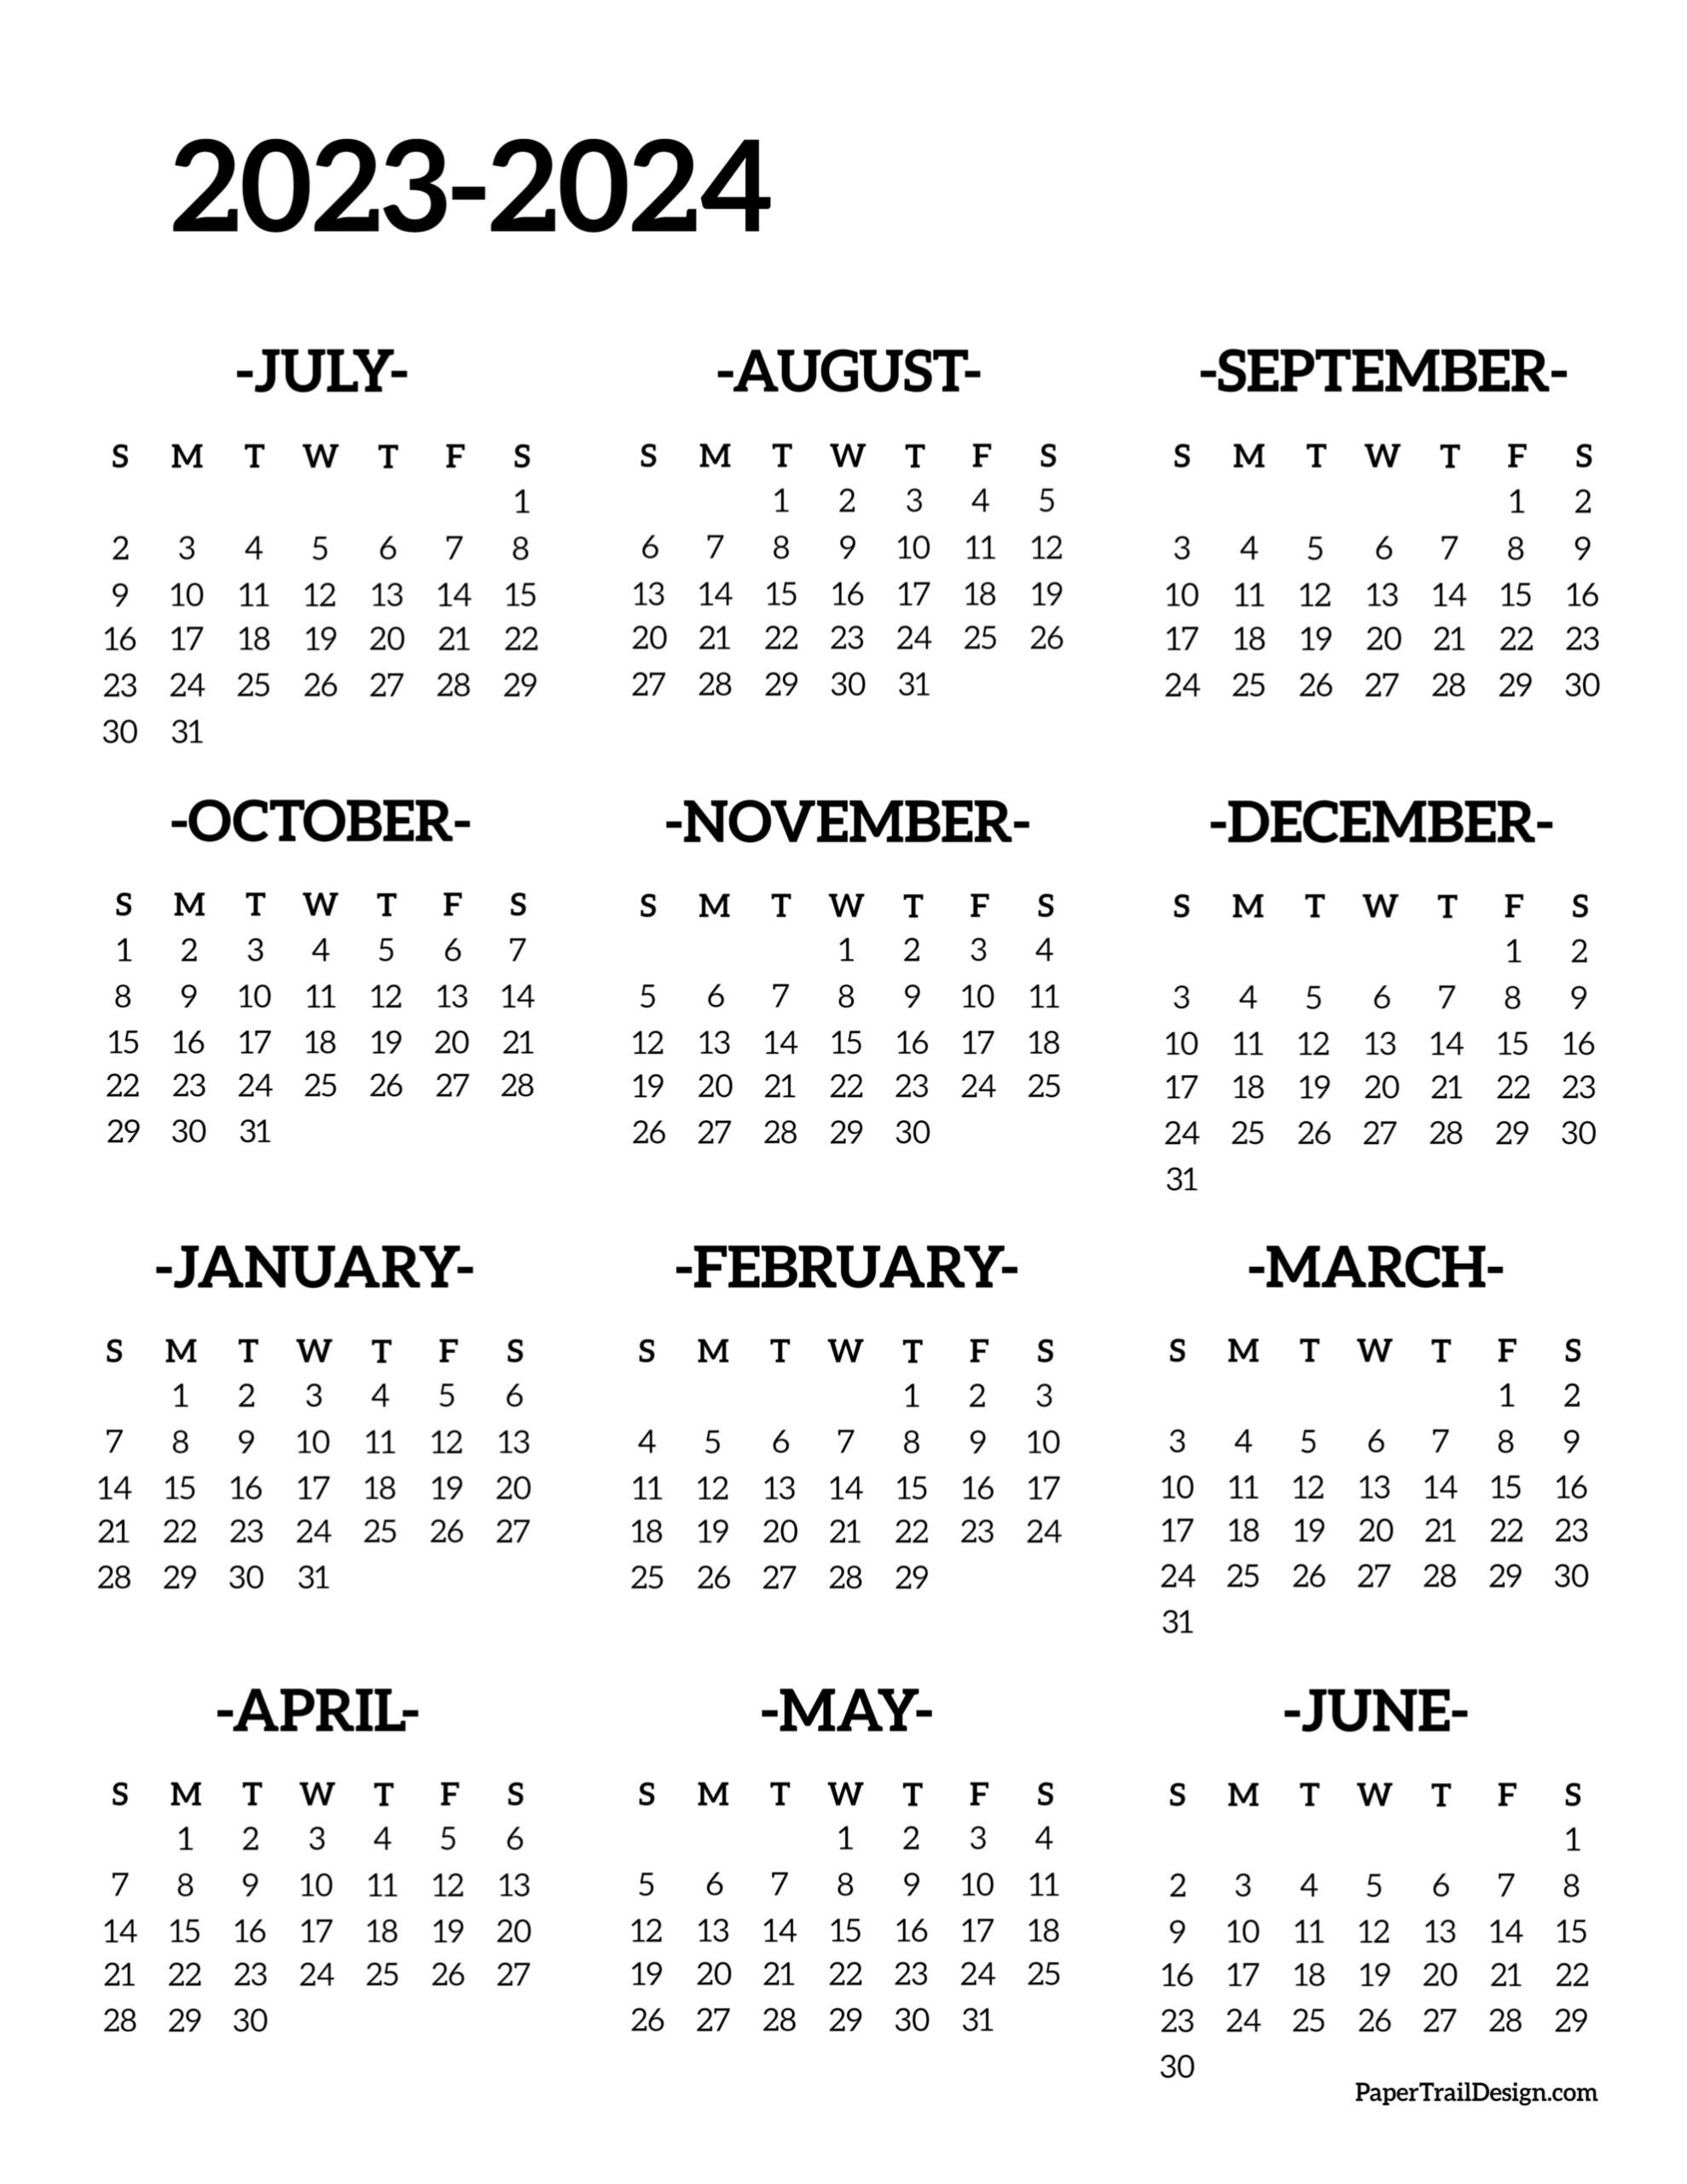 2023-2024 School Year Calendar Free Printable - Paper Trail Design for 2023 And 2024 Free Printable Calendar